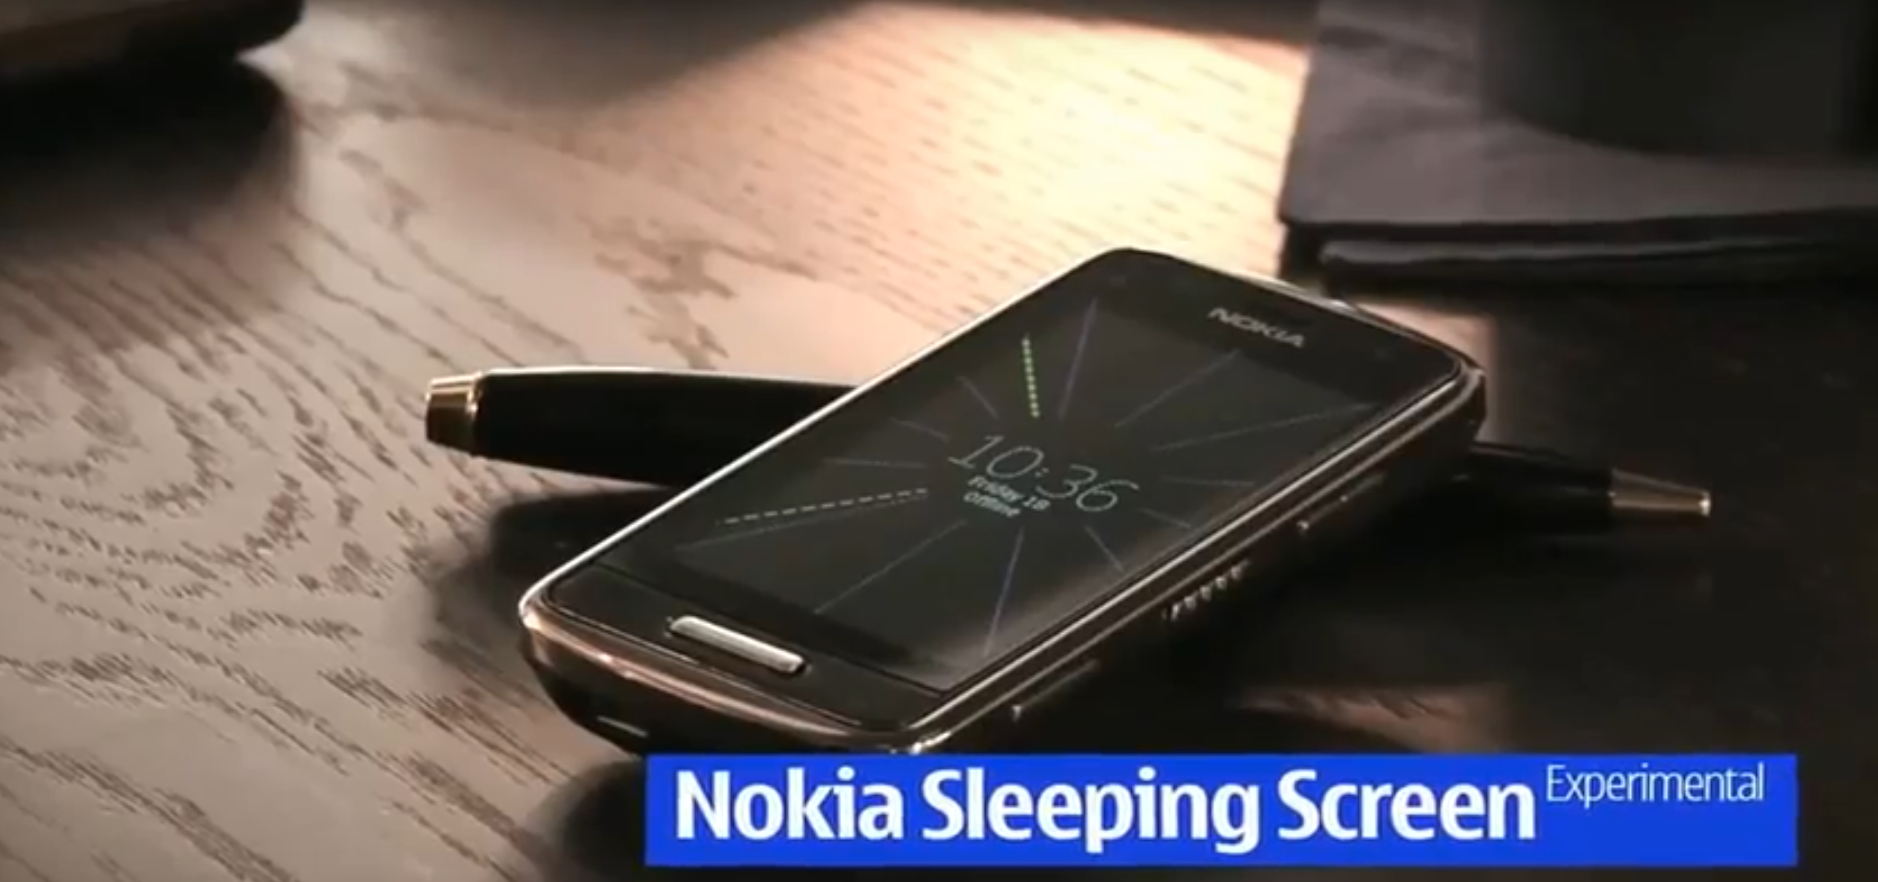 Nokia Glance screen